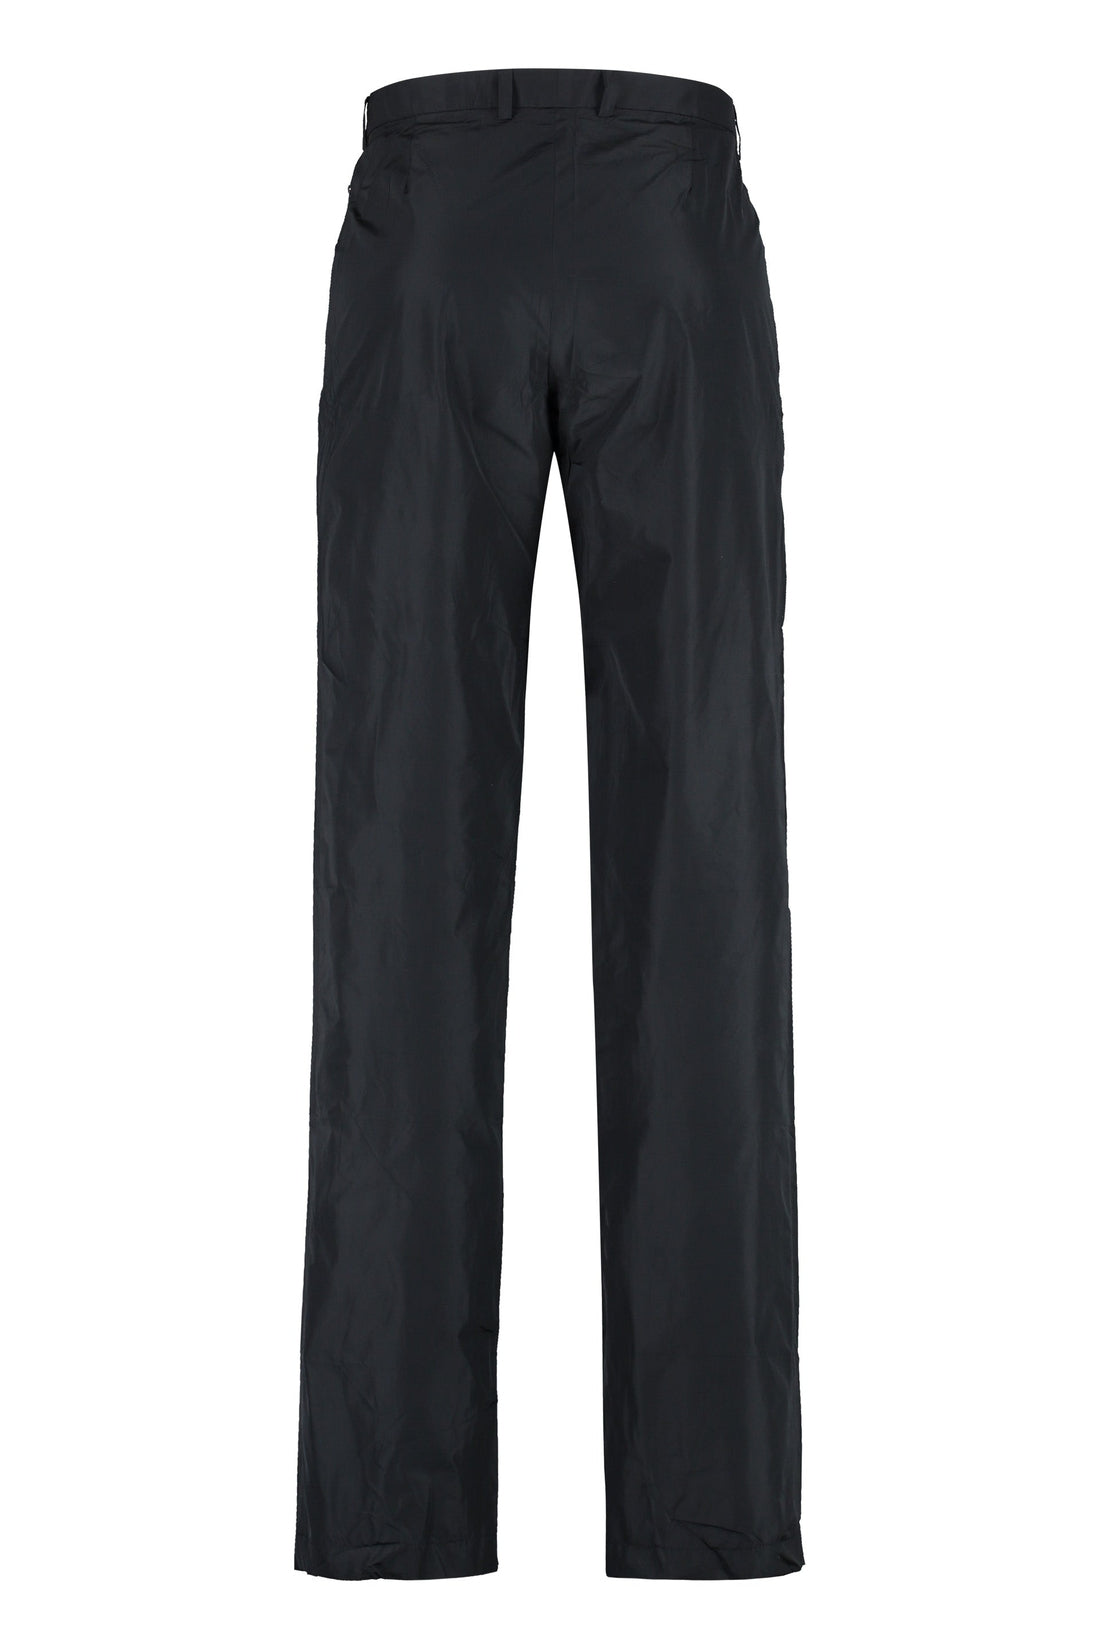 Balenciaga-OUTLET-SALE-Technical fabric pants-ARCHIVIST